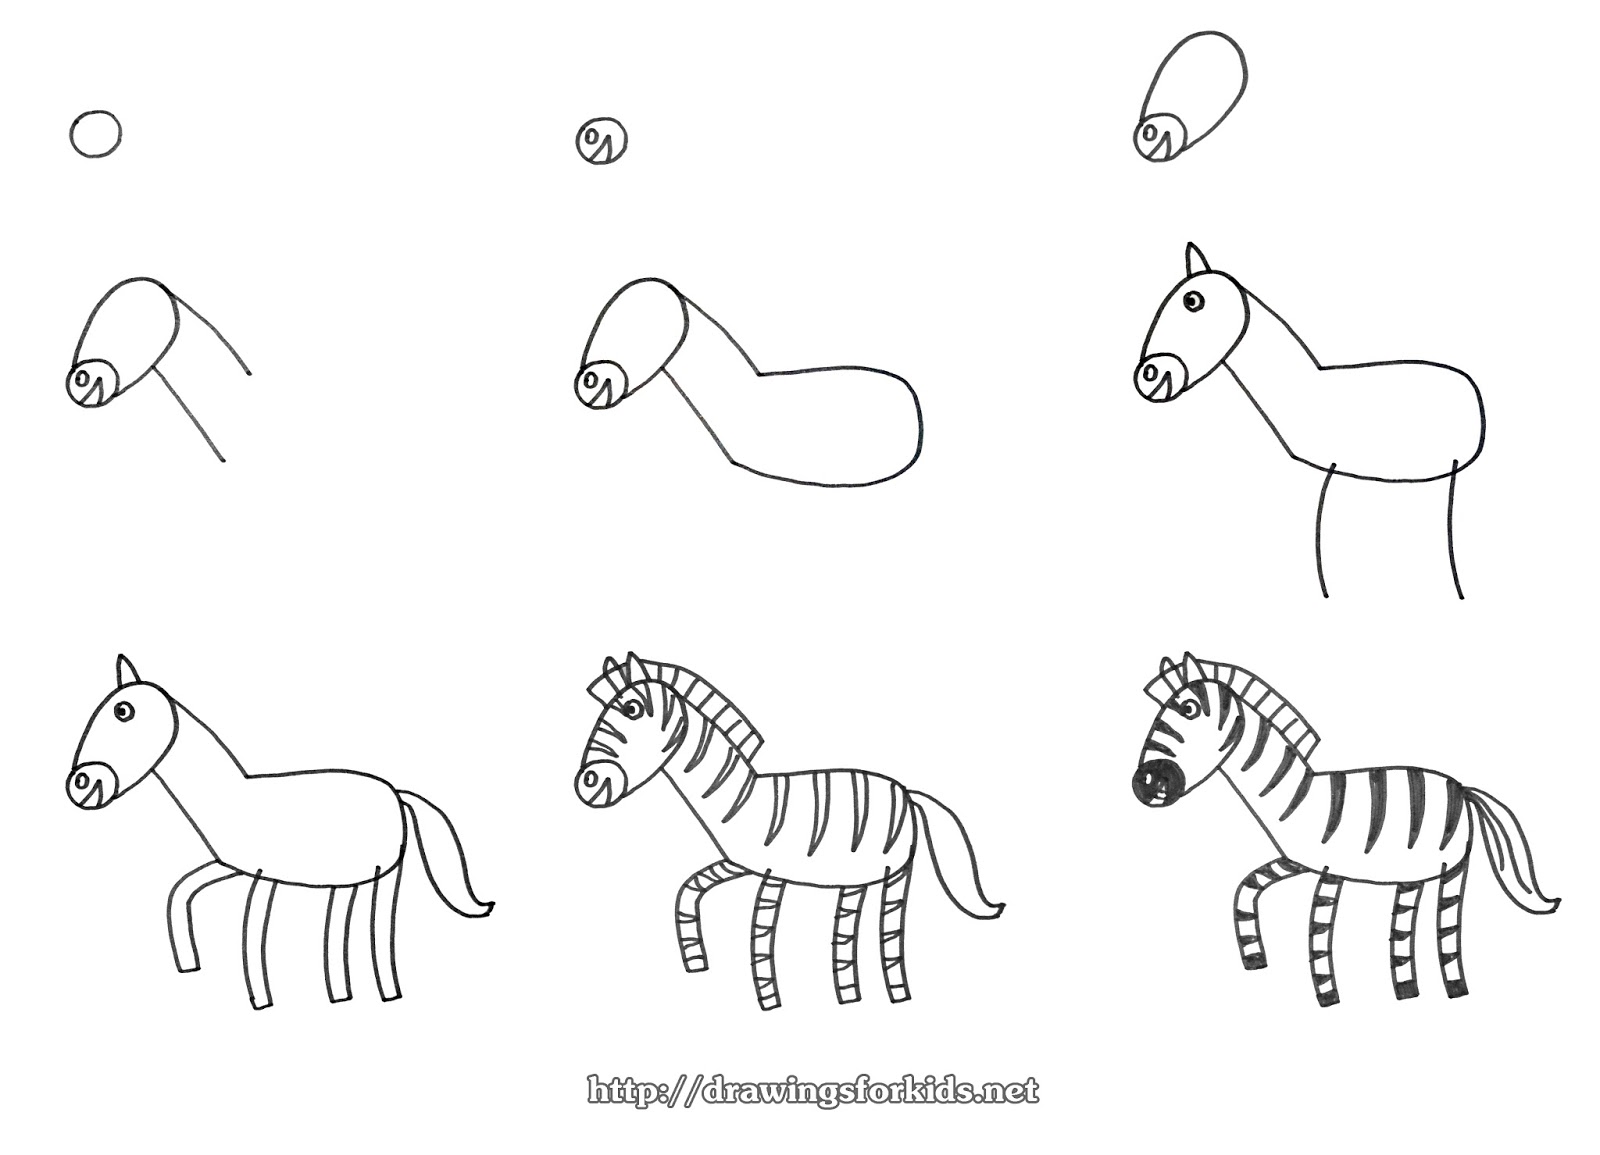 How to draw a Zebra for kids - drawingsforkids.net